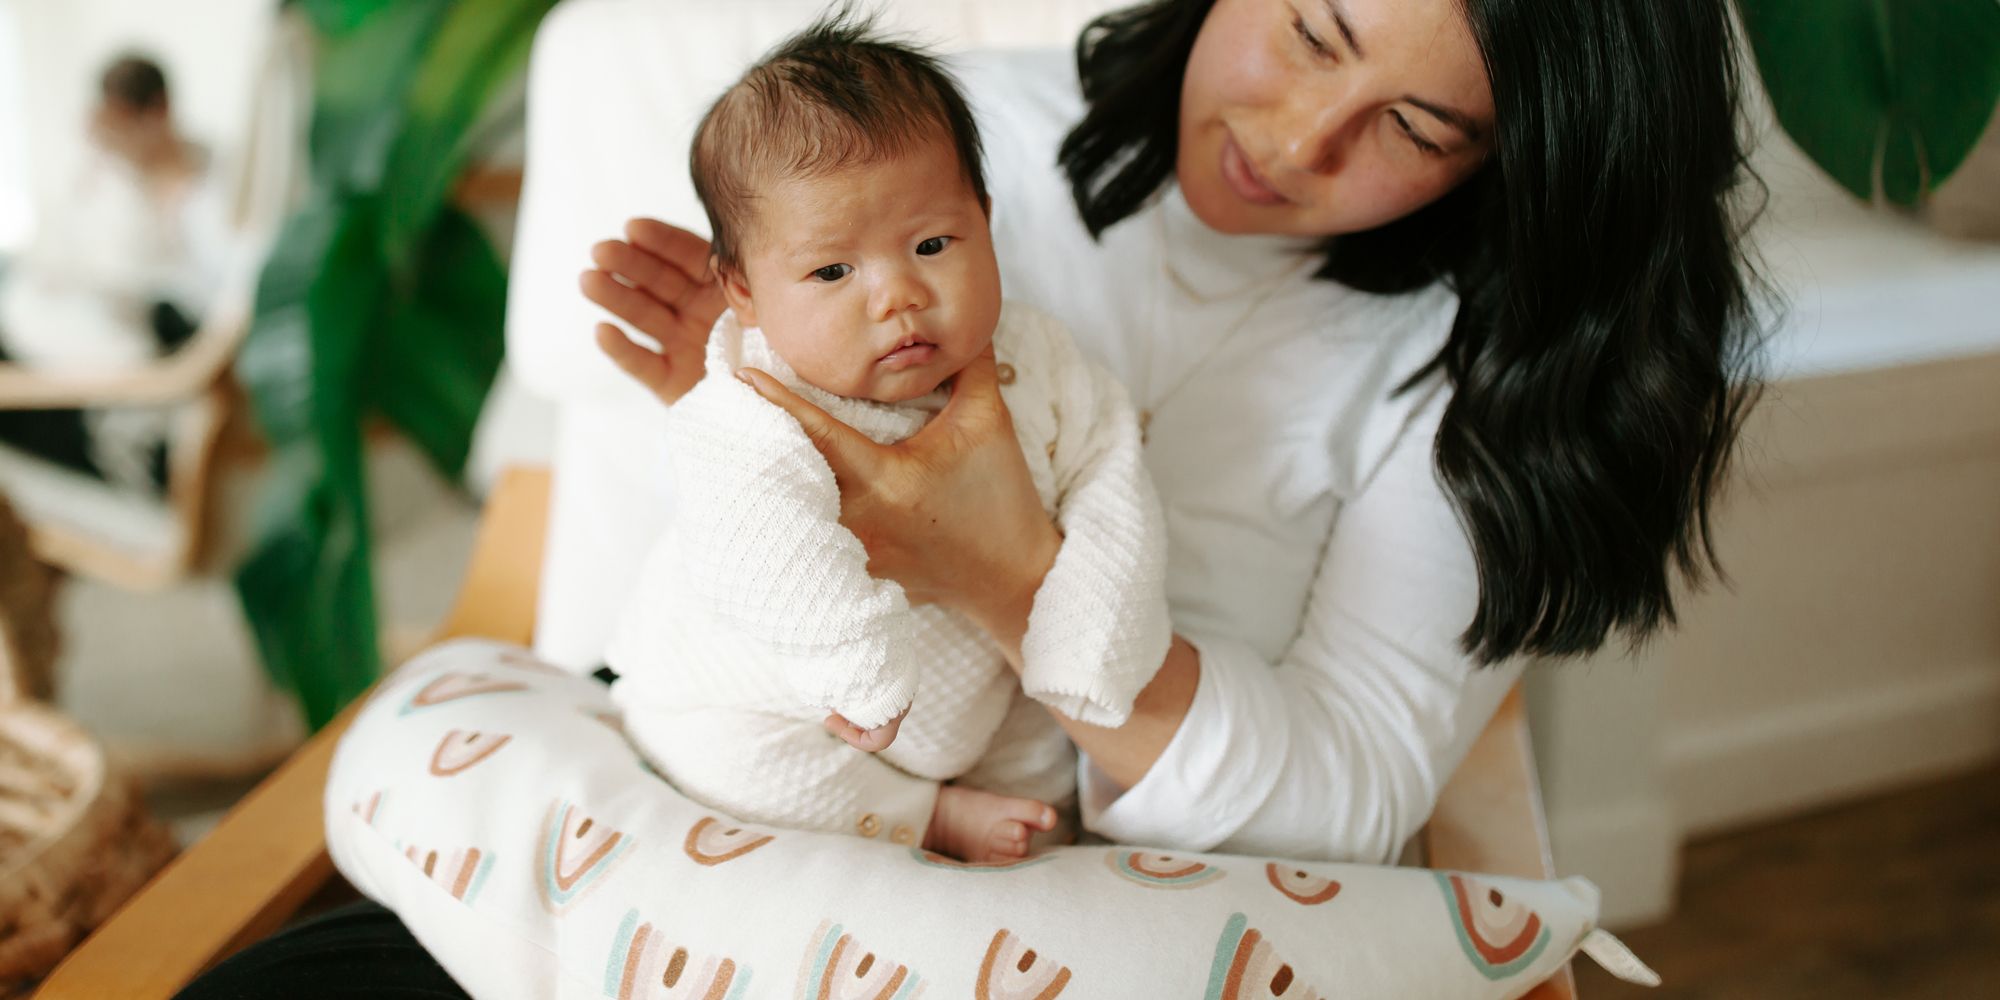 7 best nursing pillows for breastfeeding